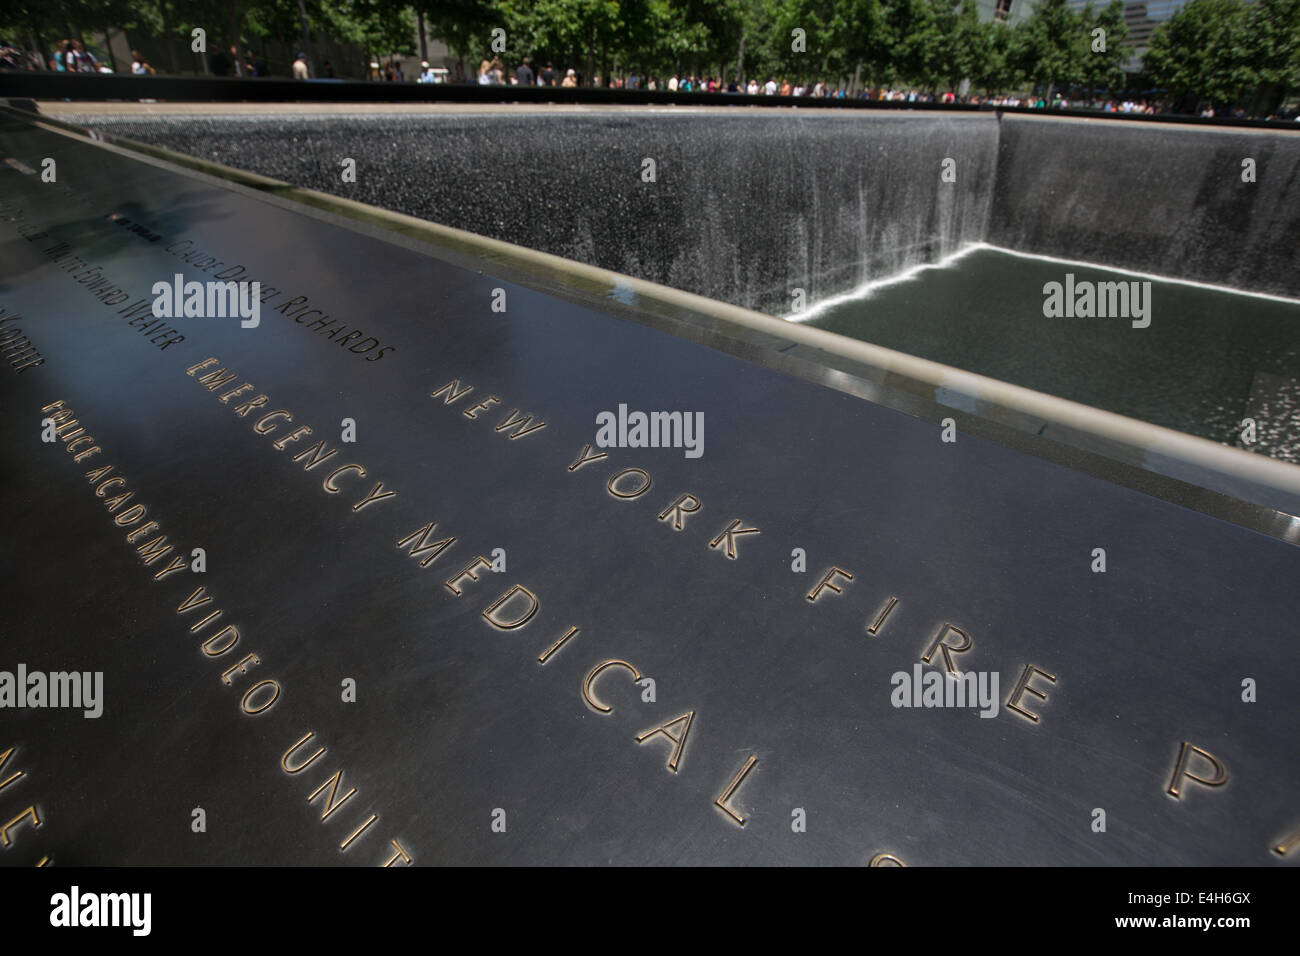 Ground Zero World Trade Centre 9-11 Memorial known as National September 11 Memorial, in Manhattan, New York, America. Stock Photo